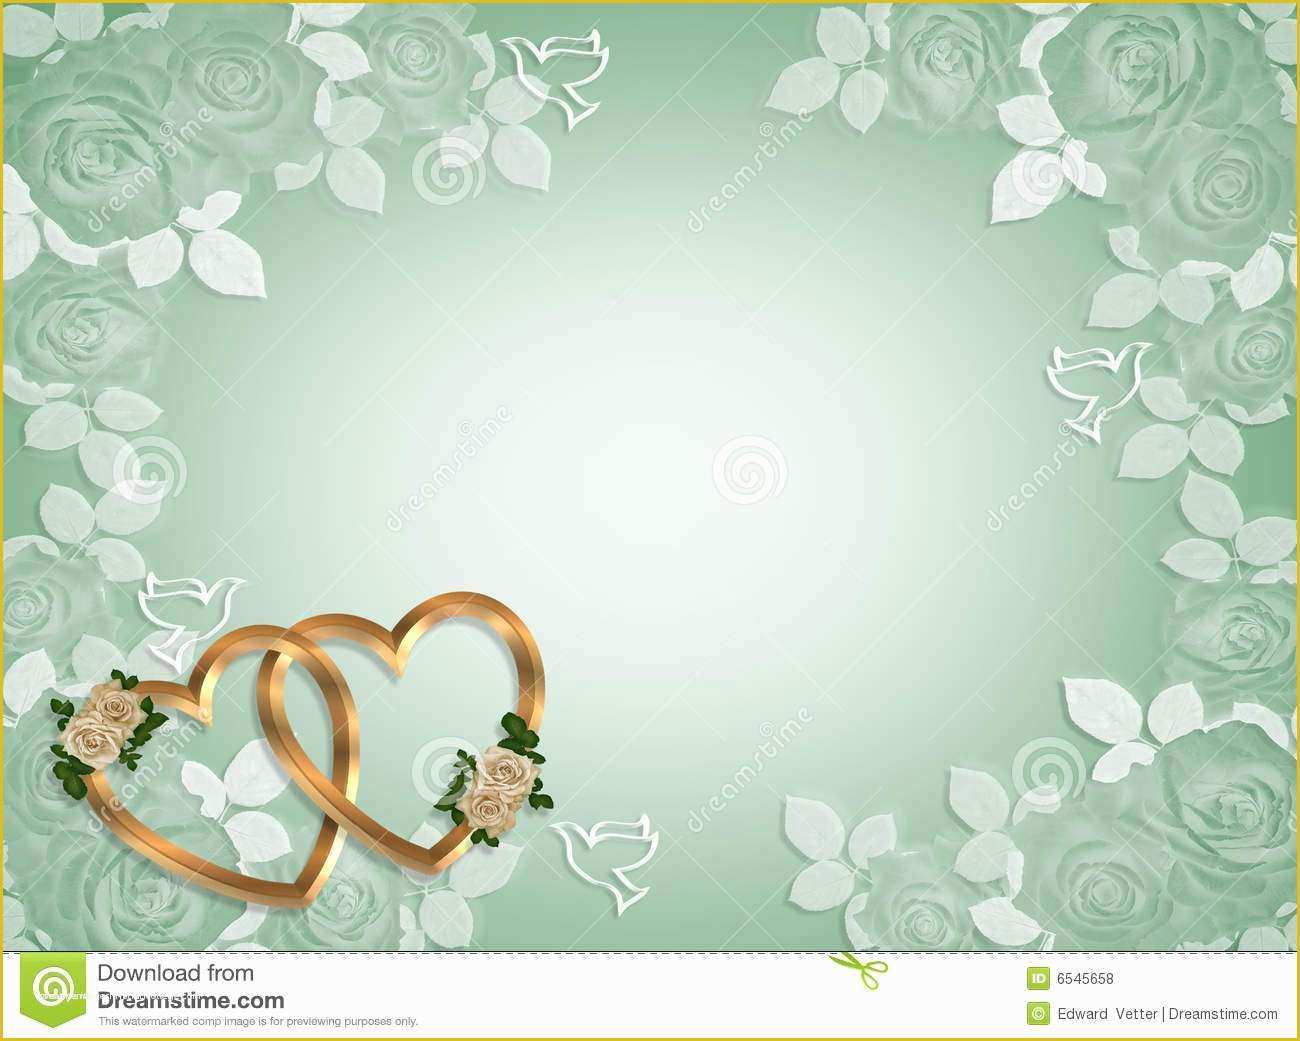 Royal Wedding Invitation Template Free Of Wedding Invitation Background Designs Free Luxury